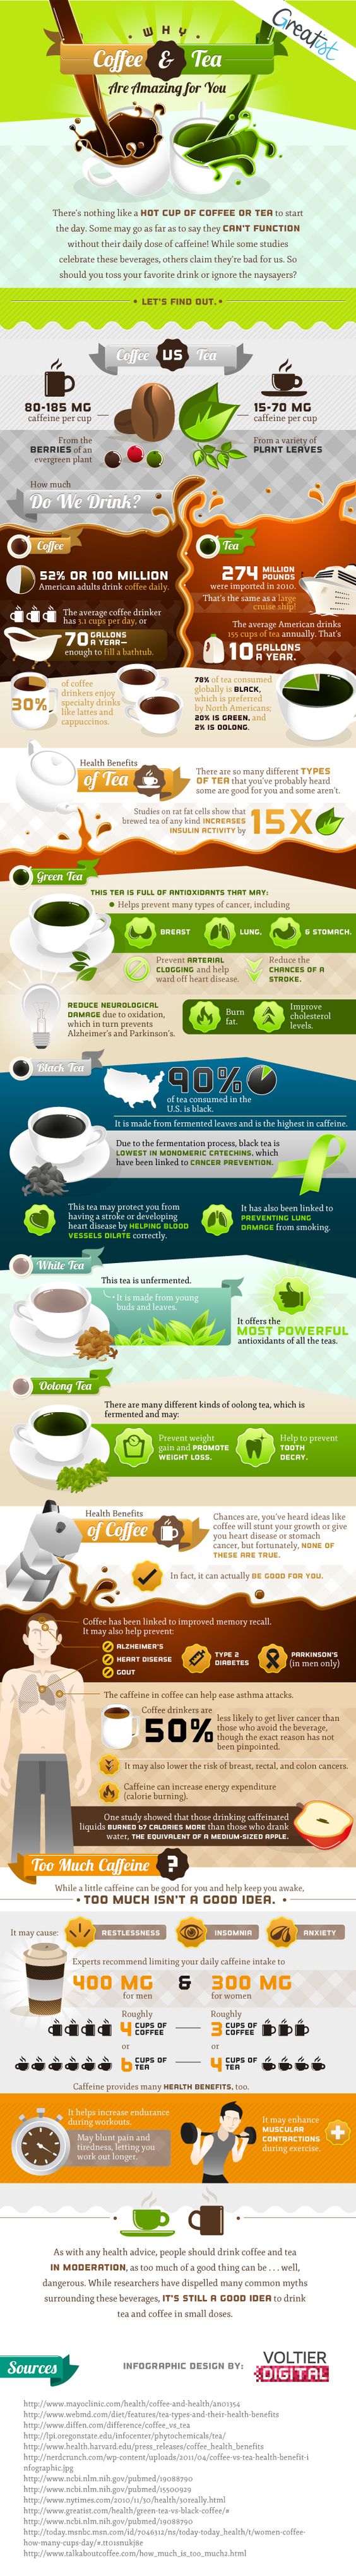 Benefits of Coffee and Tea